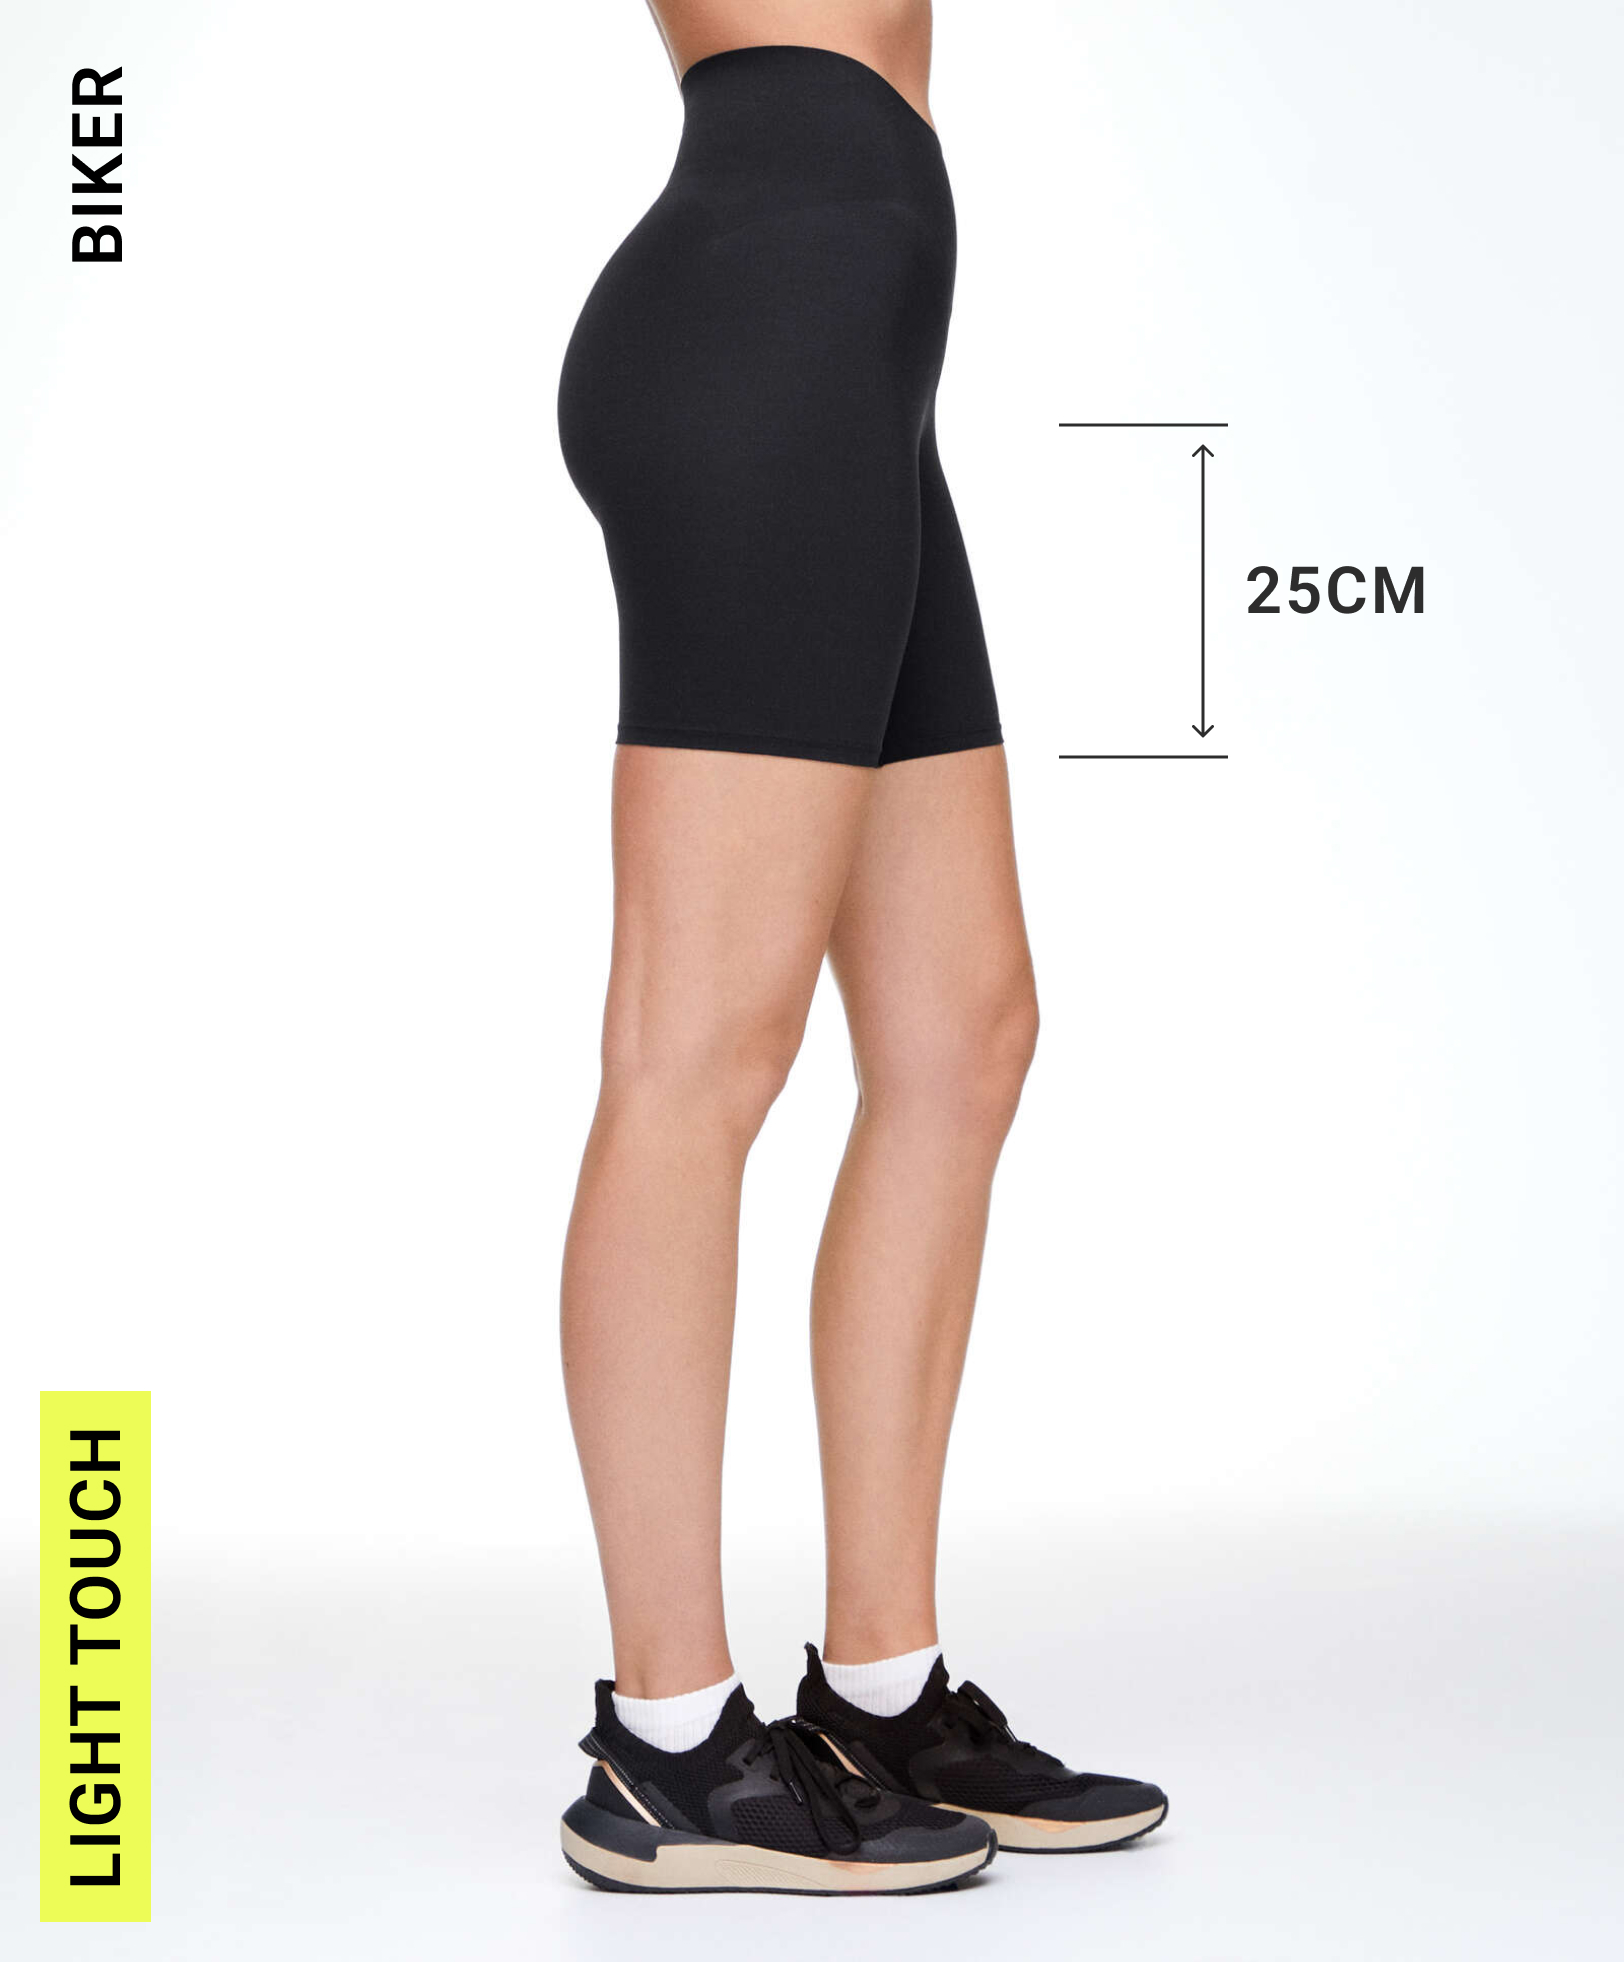 Light Touch 25cm cycle short leggings